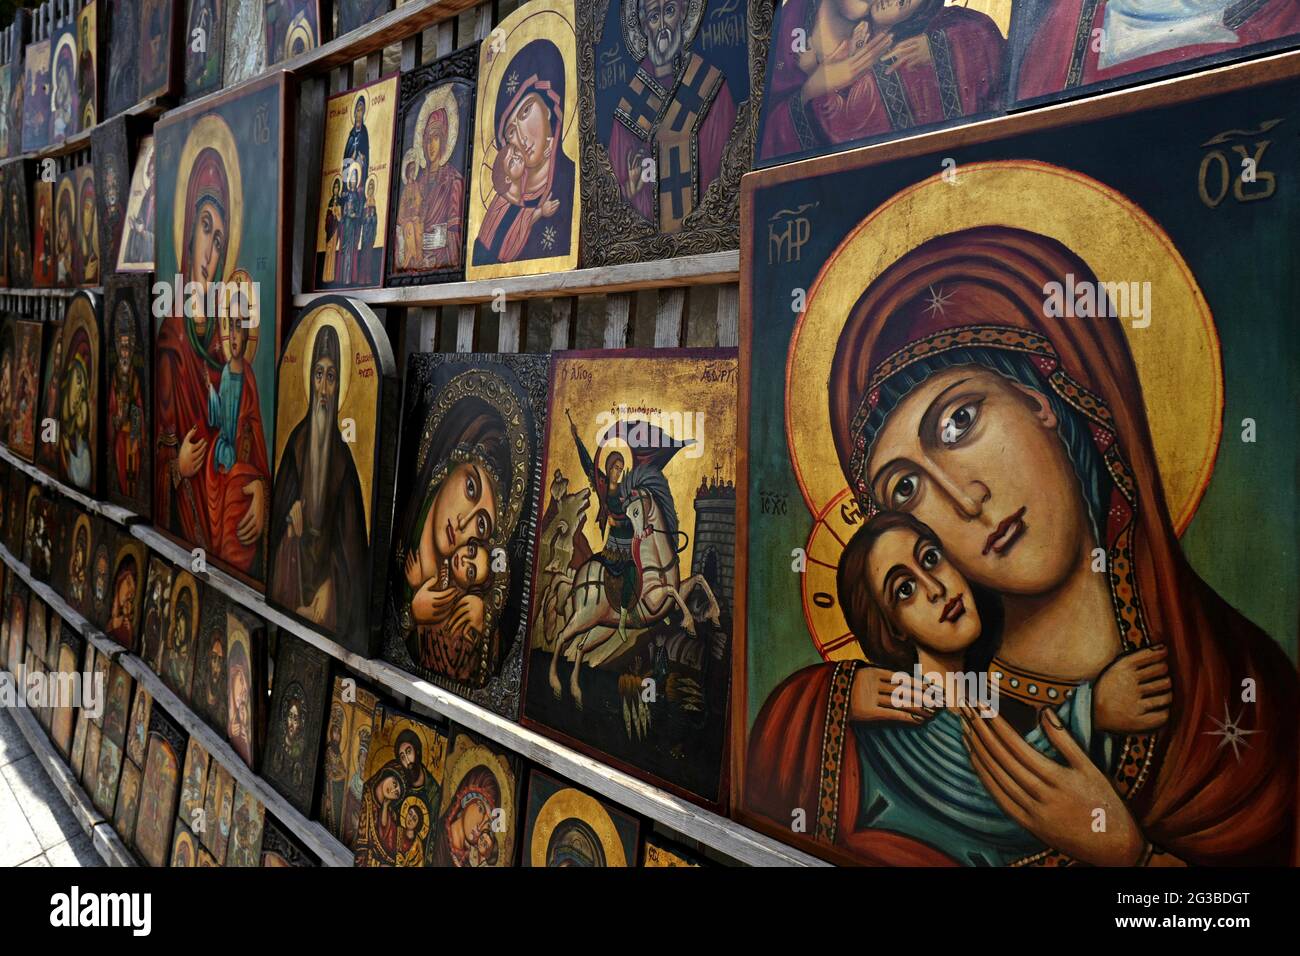 Christian orthodox icons, in Sophia, Bulgaria Stock Photo